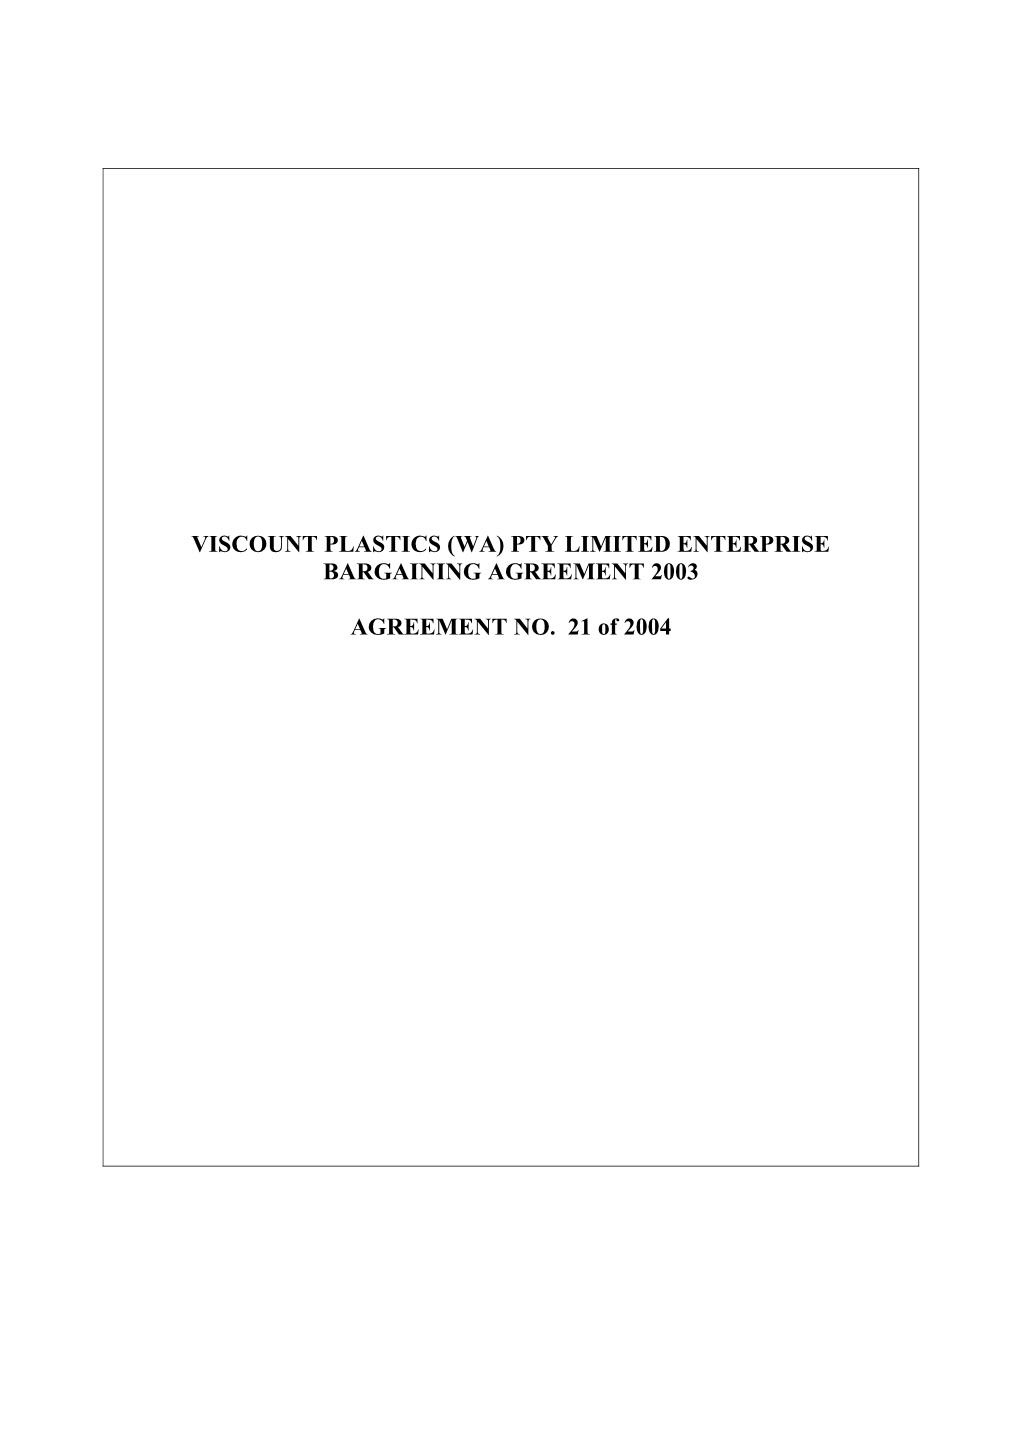 Viscount Plastics (WA) Pty Linited Enterprise Bargaining Agreement 2003